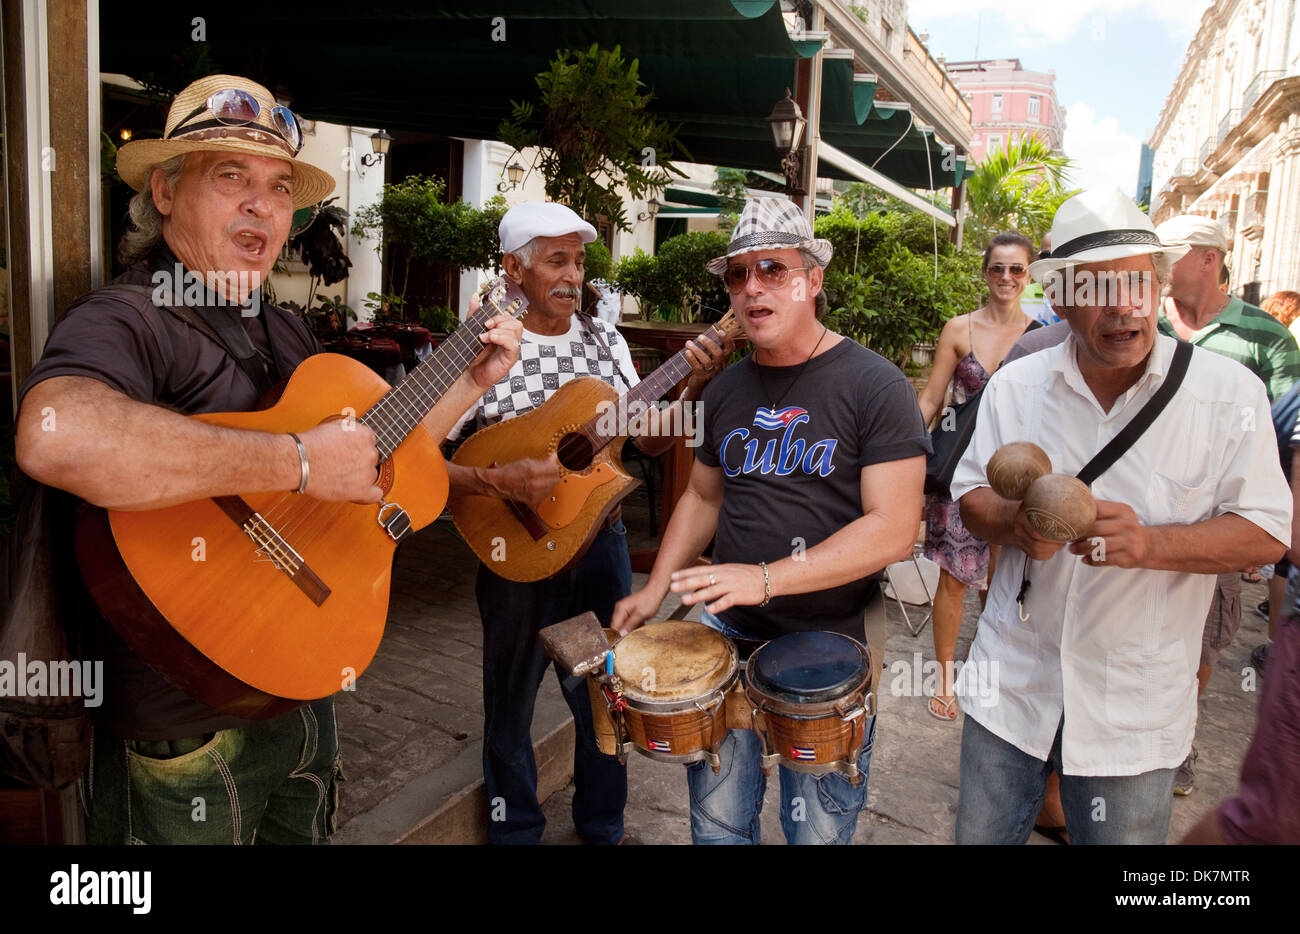 Street musicians Cuba; Cuba music - Musical group playing music in the street, Havana Cuba Caribbean, Latin America Stock Photo